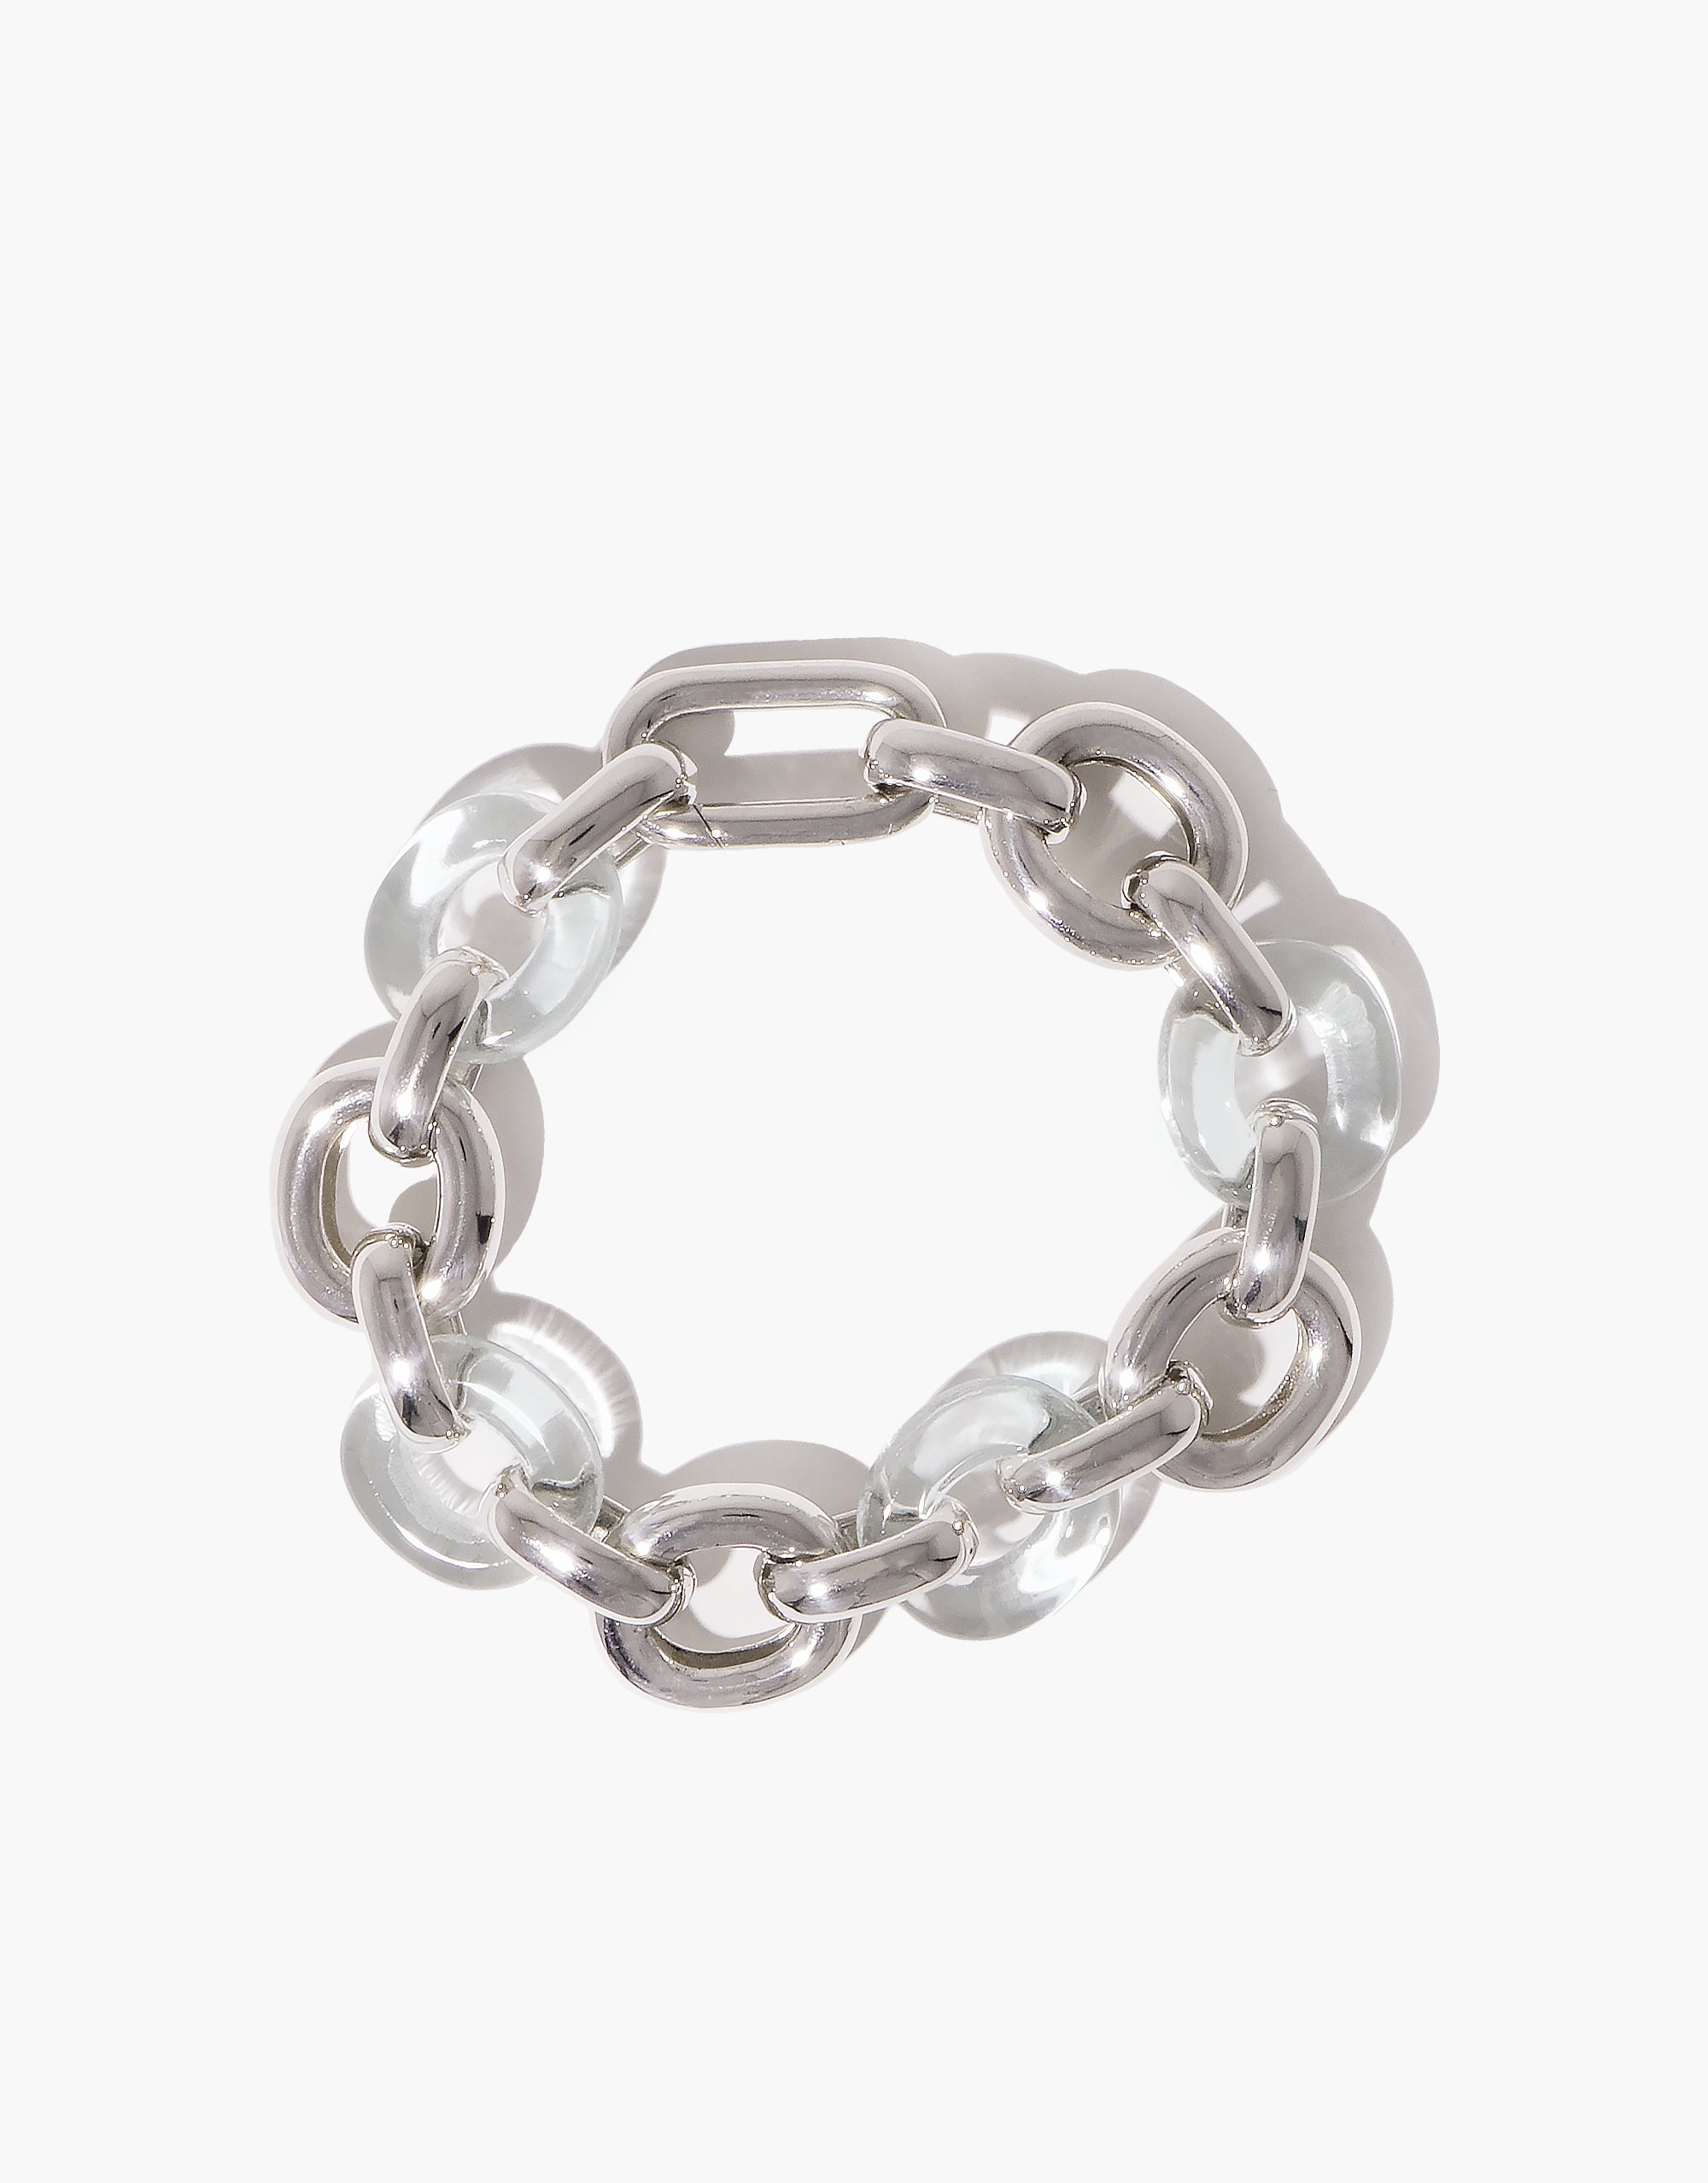 Connected Loop Bracelet | Mixed Metal & Glass